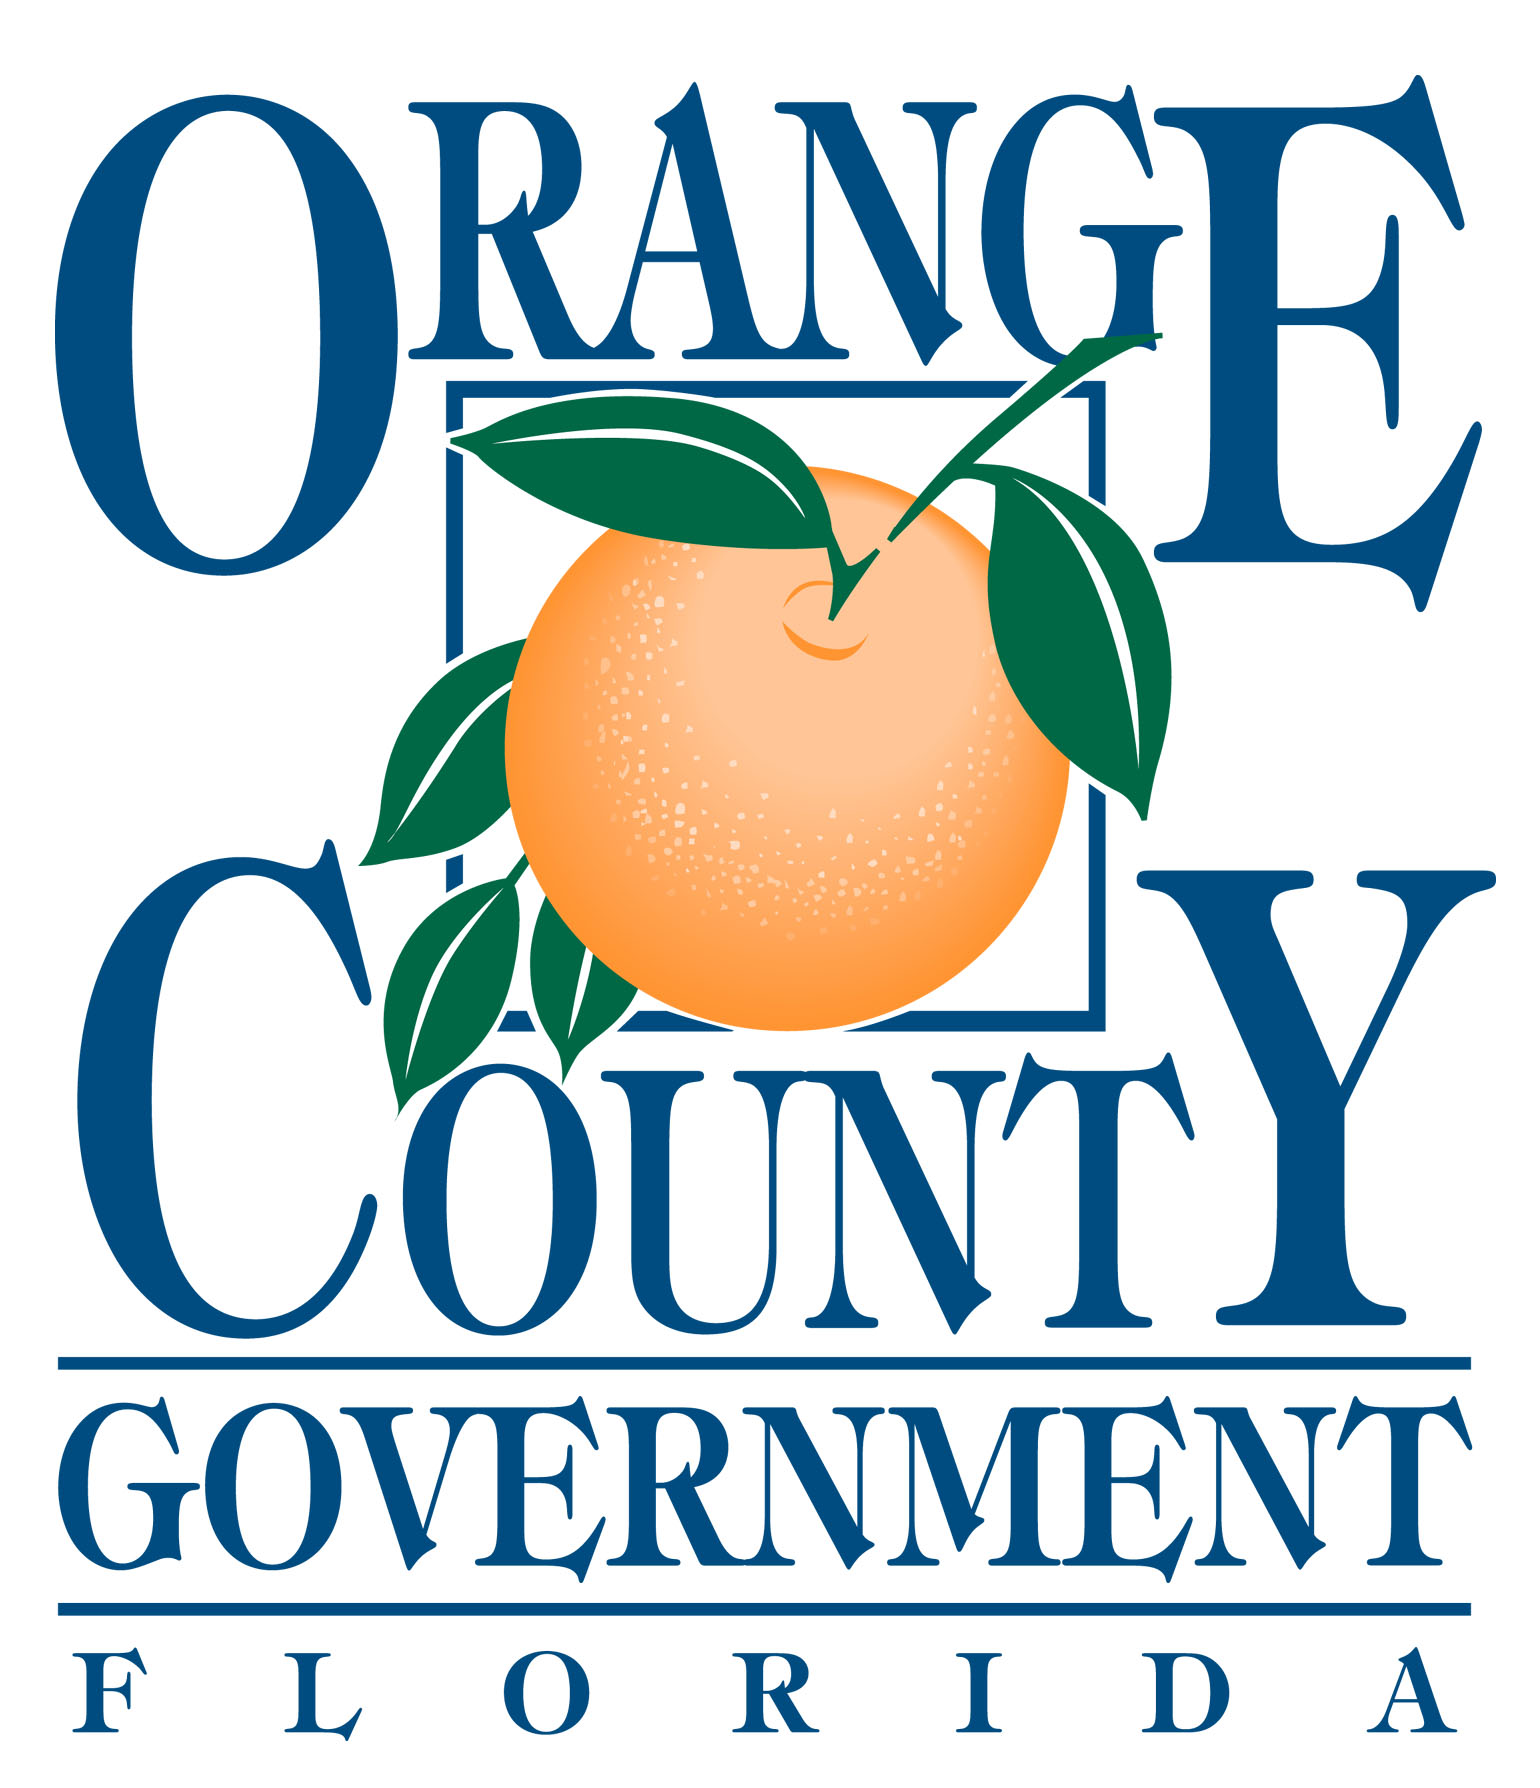 Orange County Government